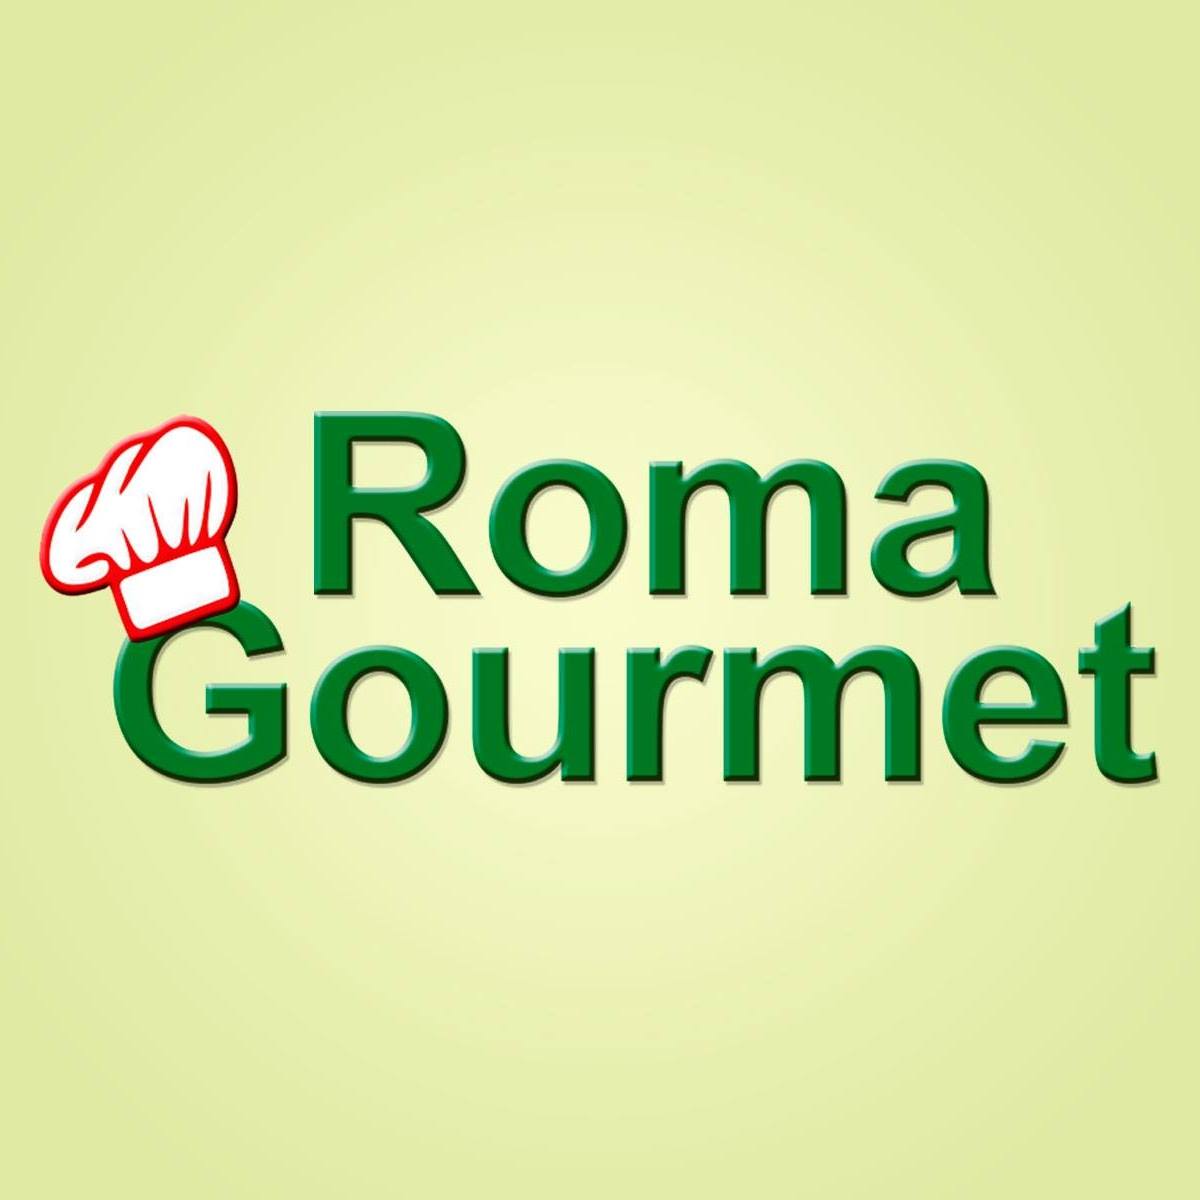 Roma Gourmet